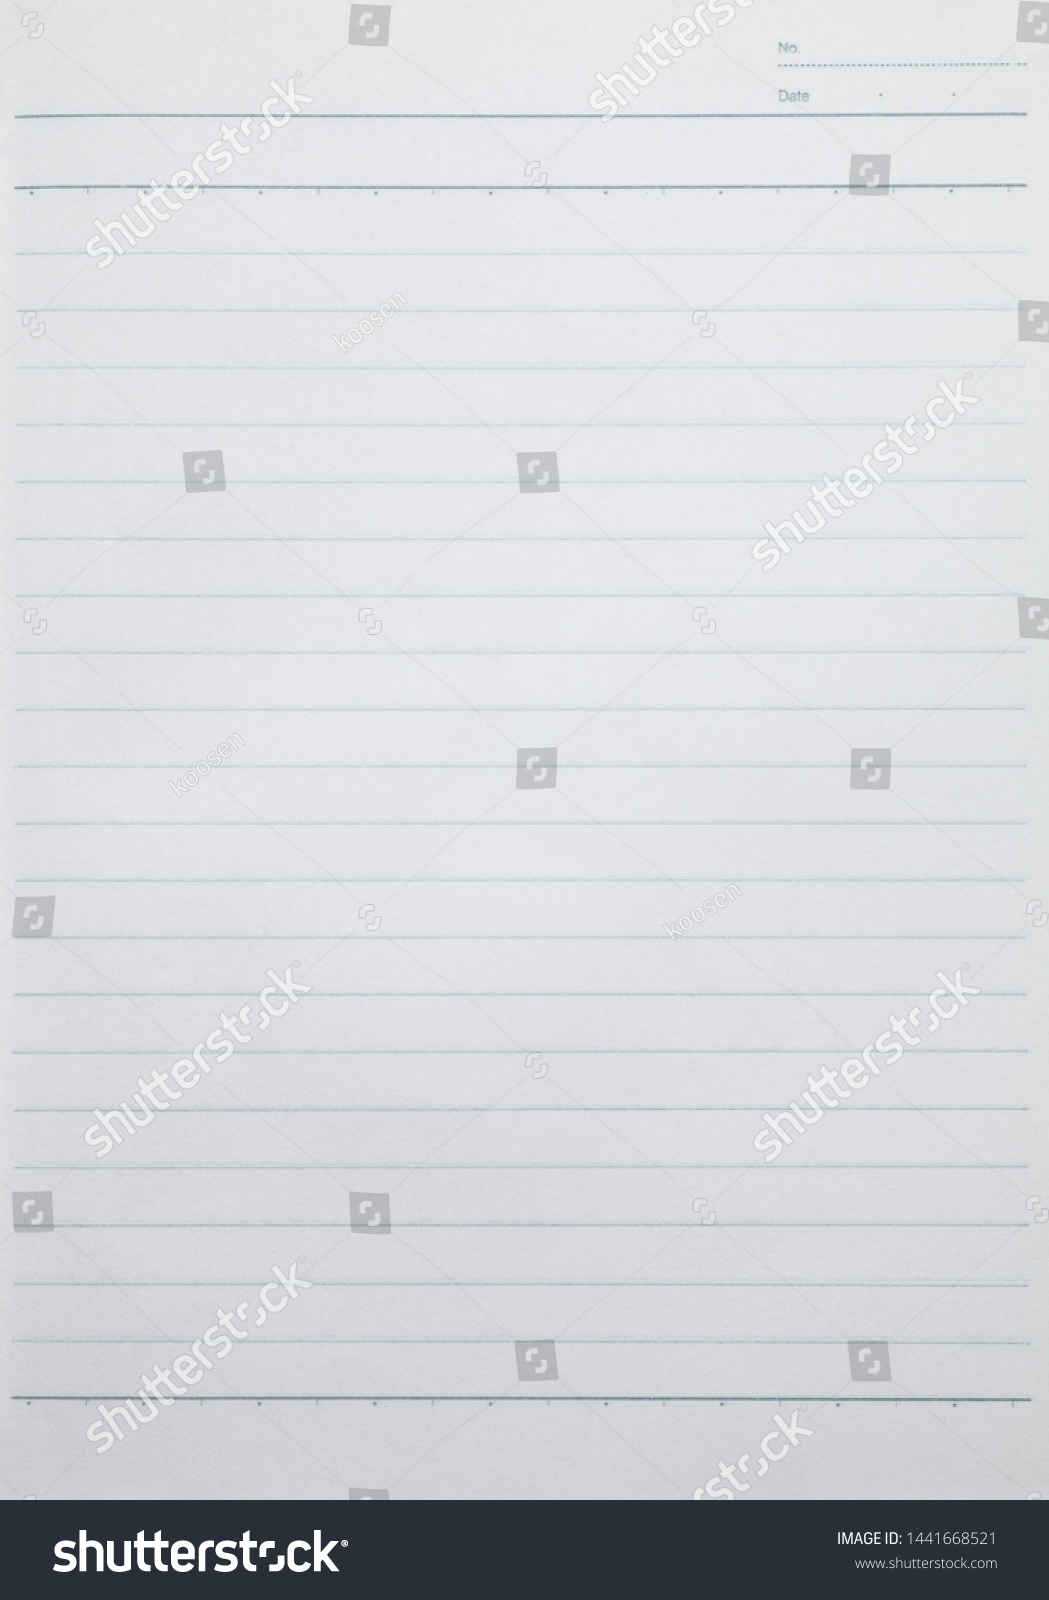 Lined Sheet Paper Blank Half Writing Printable Template For Blank Letter Writing Template For Kids